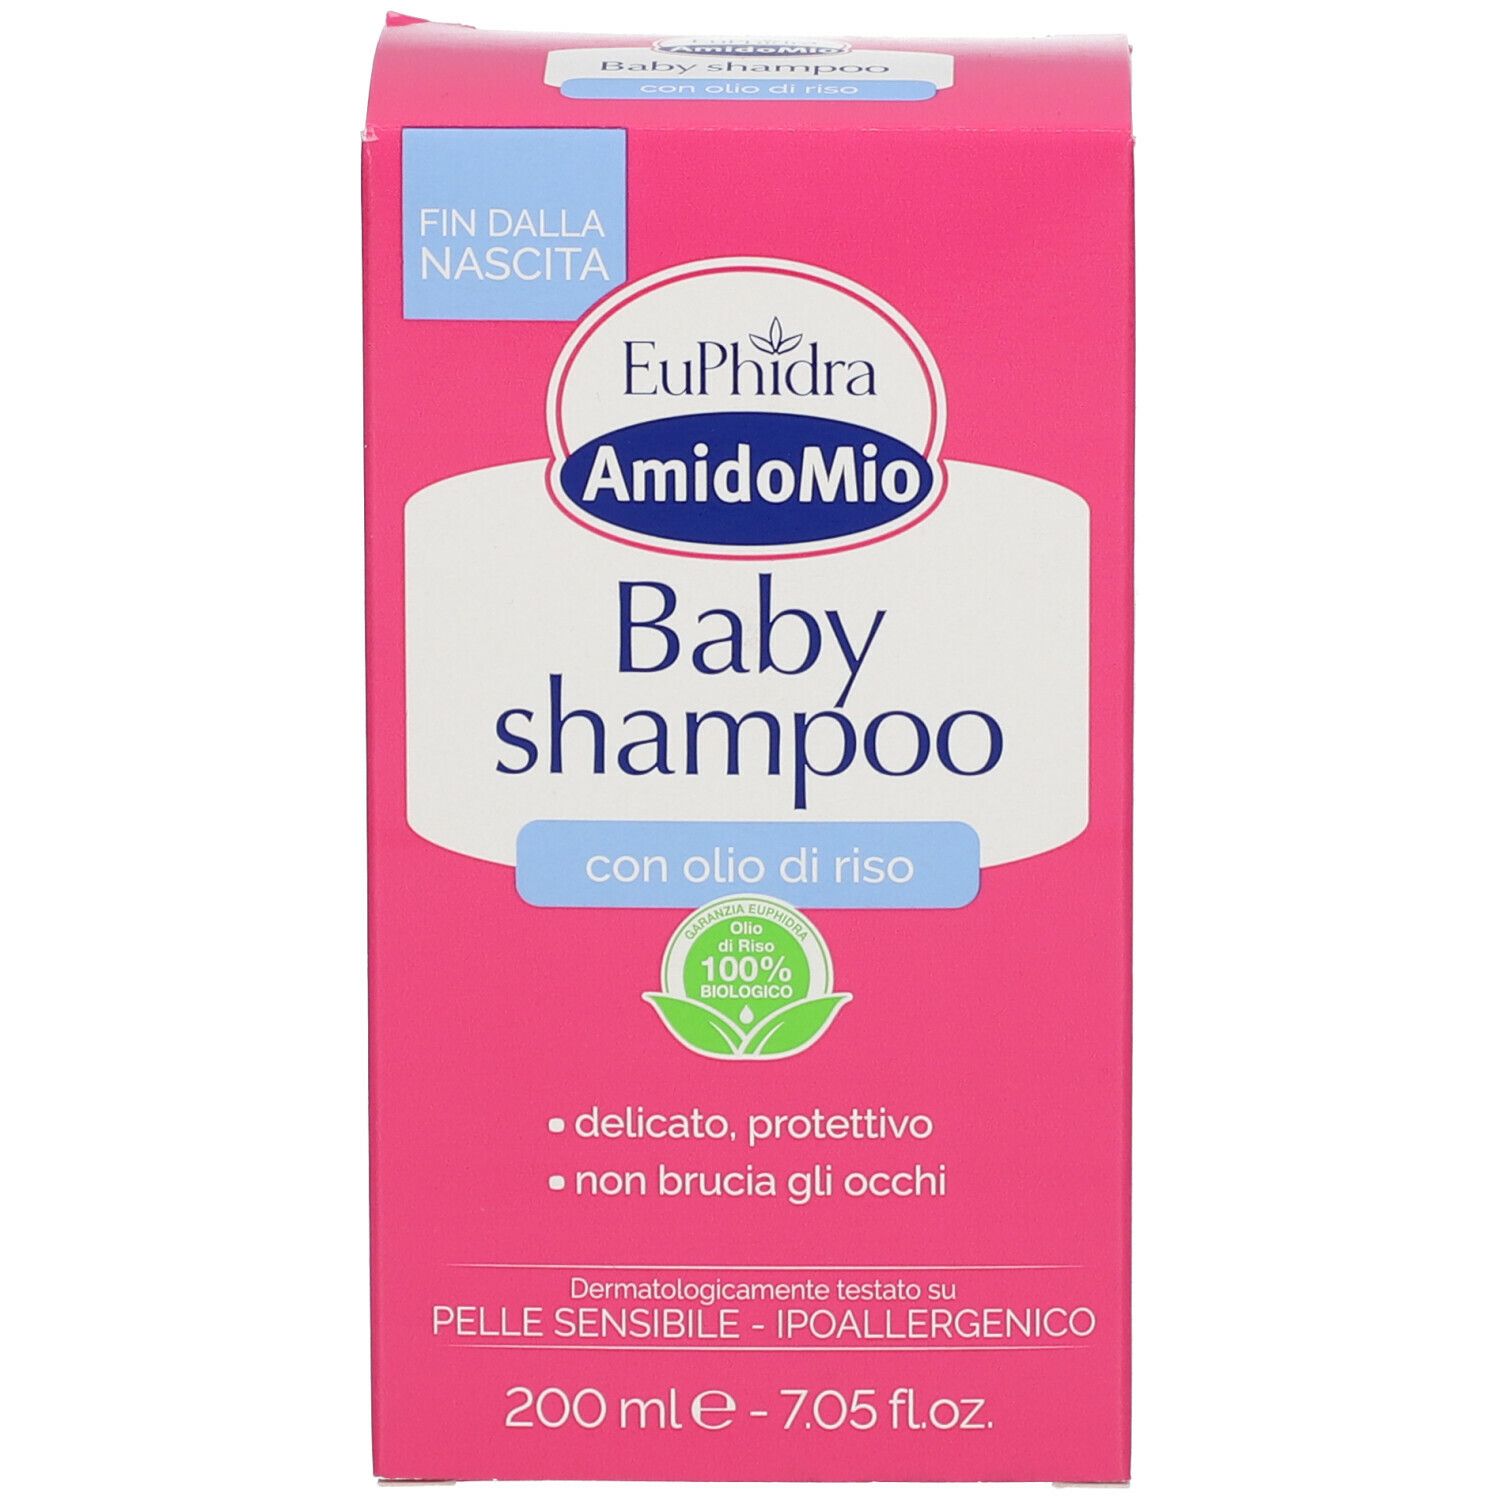 Euphidra Amido Mio Baby Shampoo